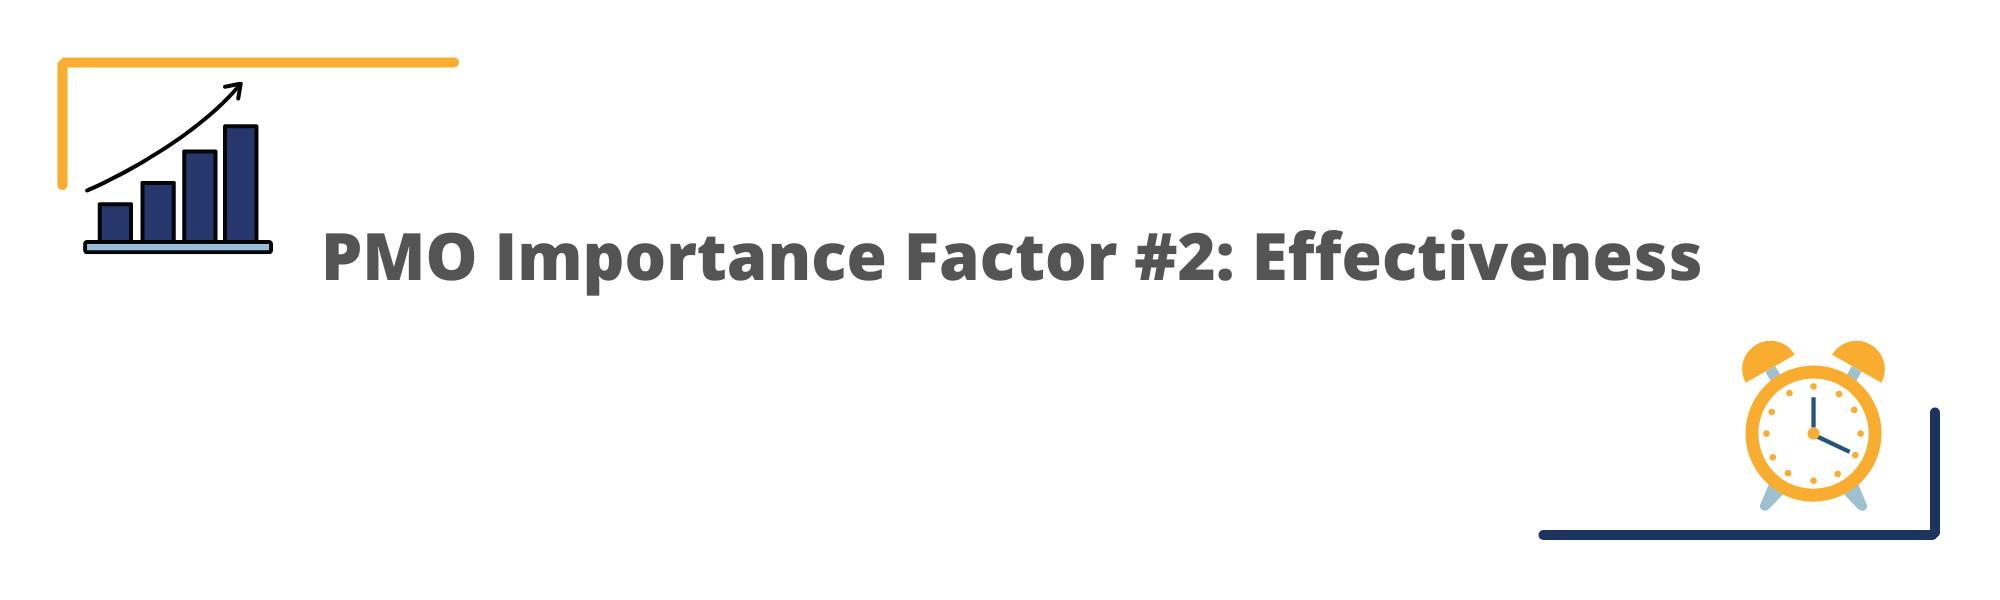 PMO Importance Factor #2: Effectiveness